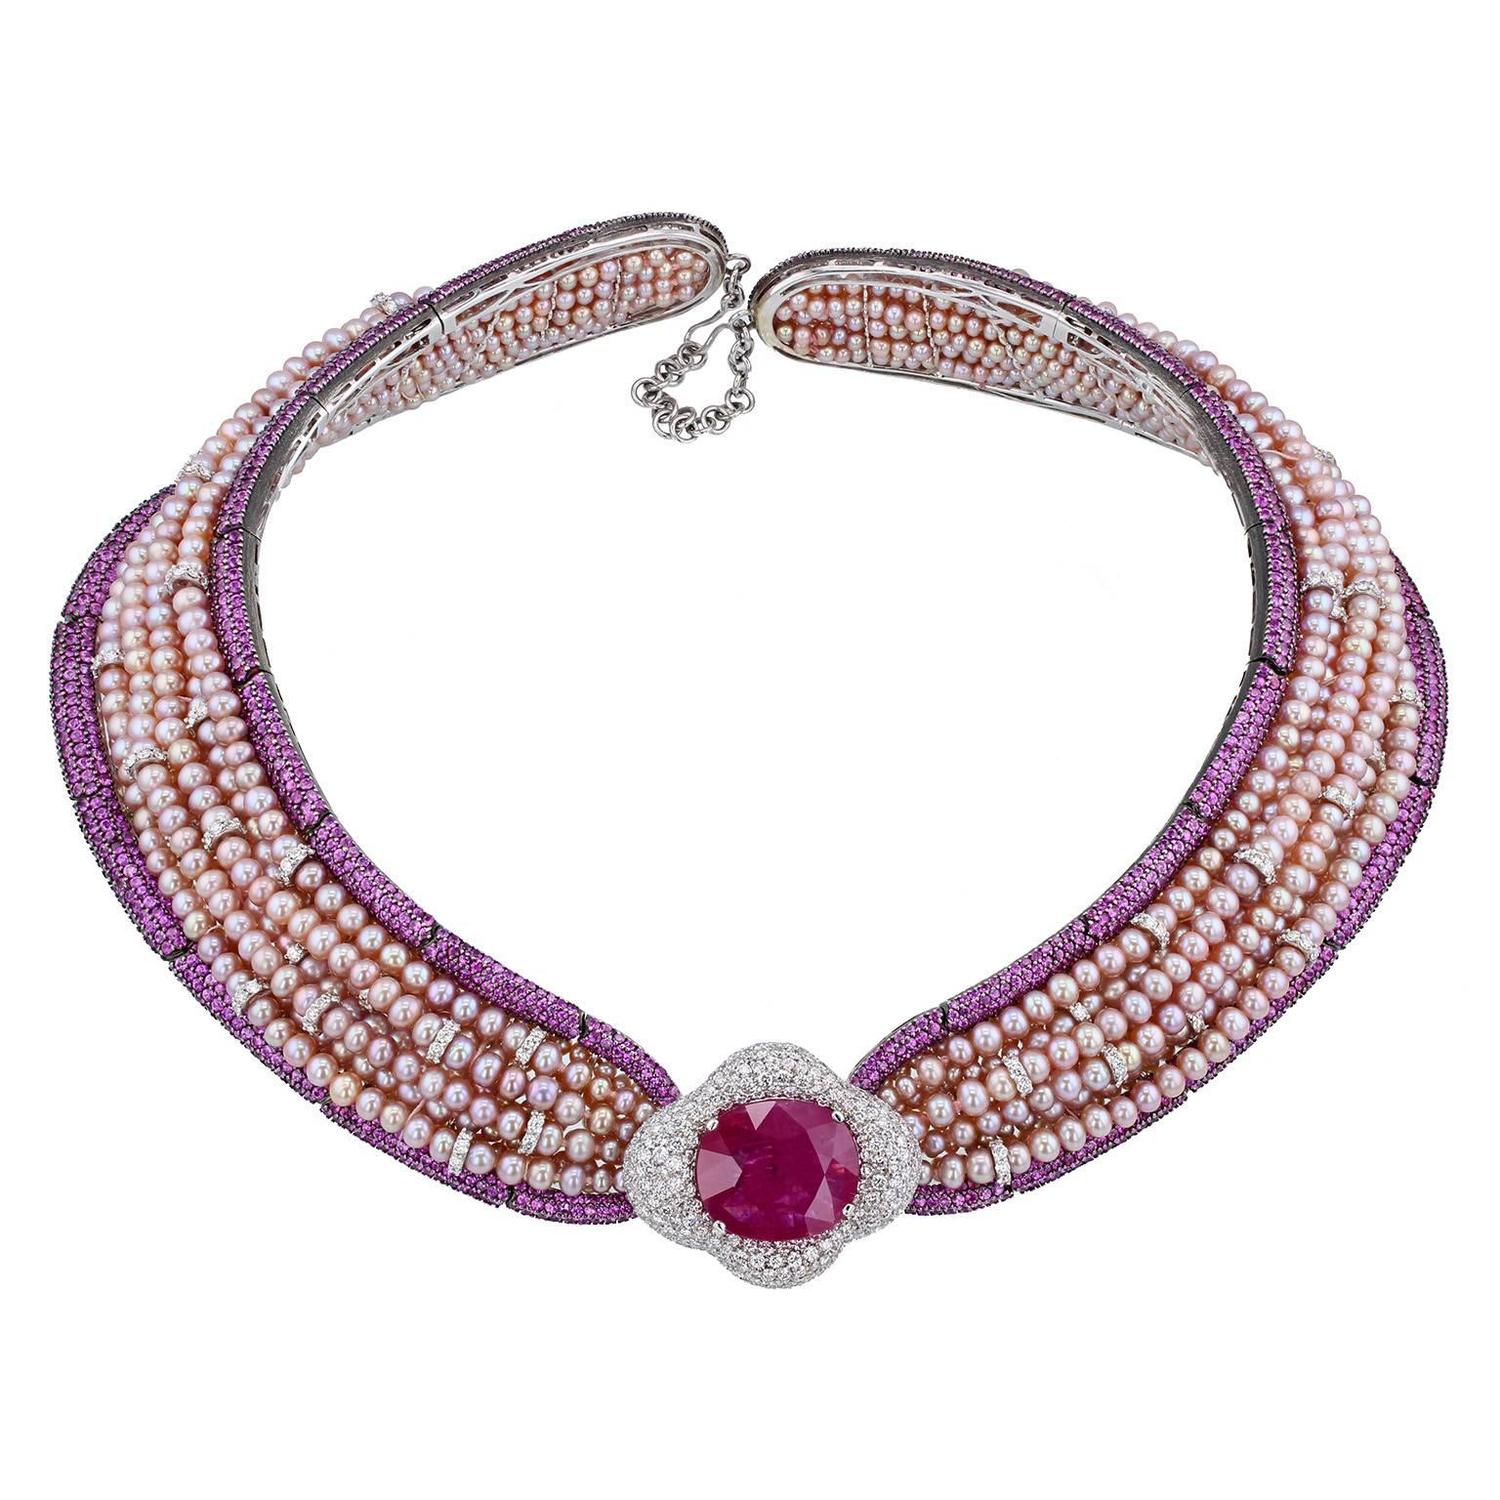 Jahan Important 30 Carat Burma Ruby Pink Sapphire Pearl Diamond Collar